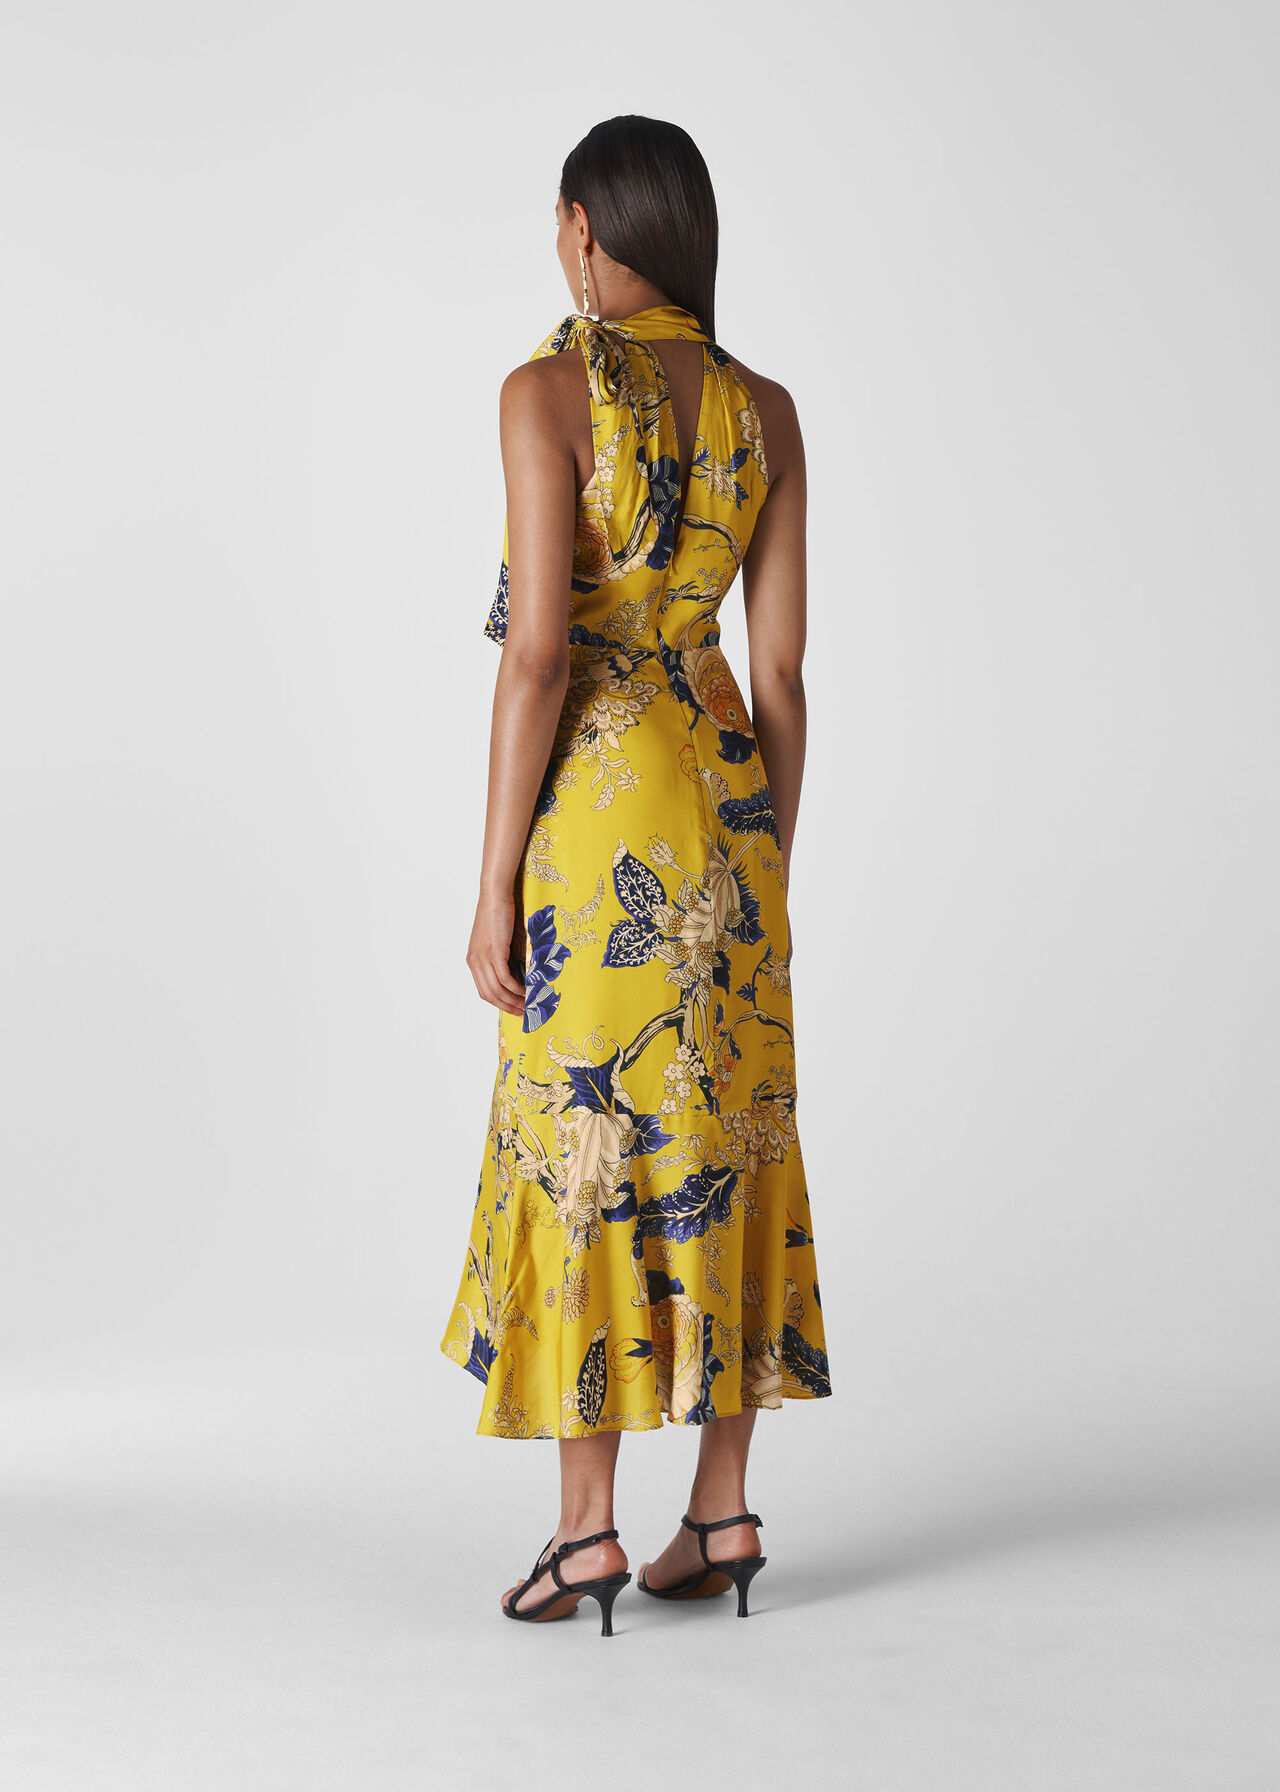 Peria Exotic Floral Dress Yellow/Multi